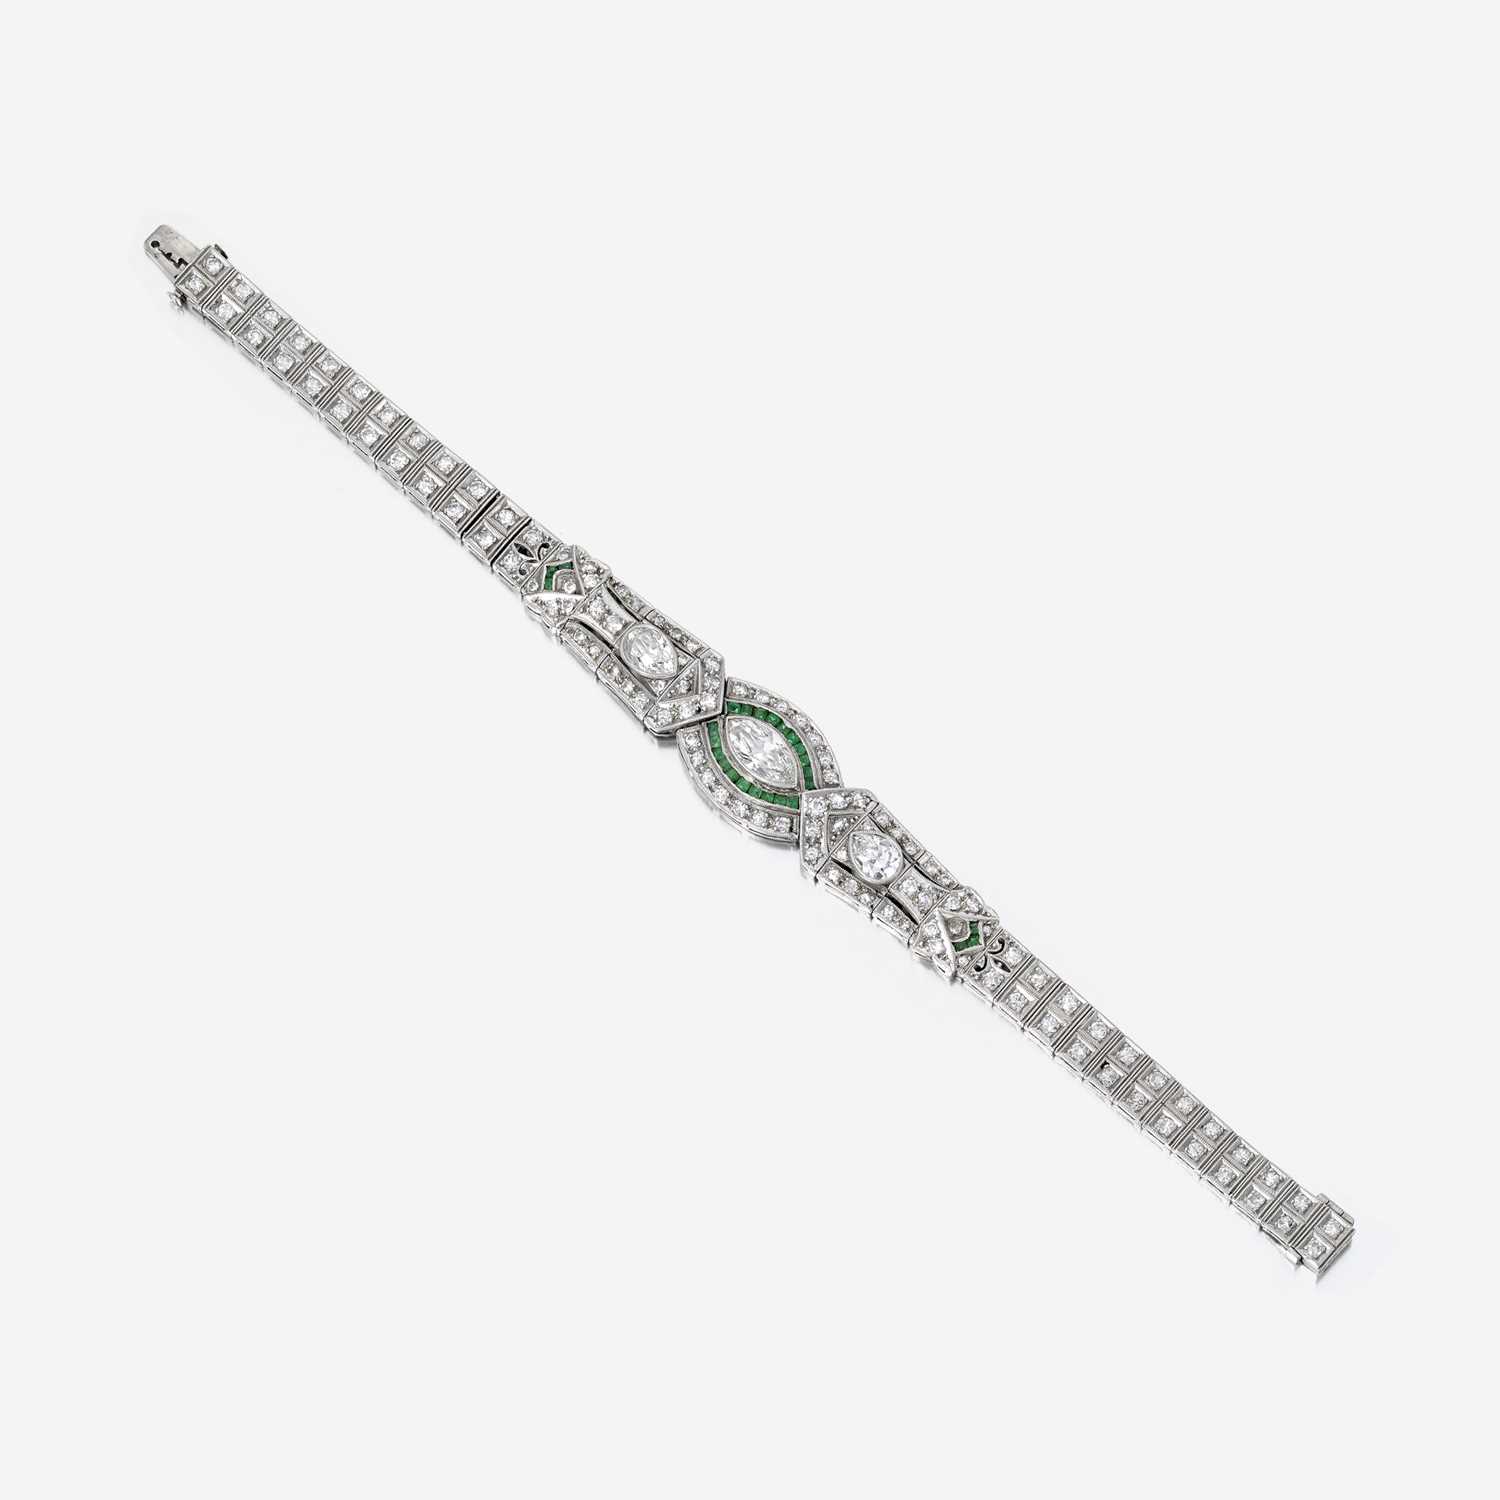 Lot 150 - An Art Deco diamond, emerald, and platinum bracelet